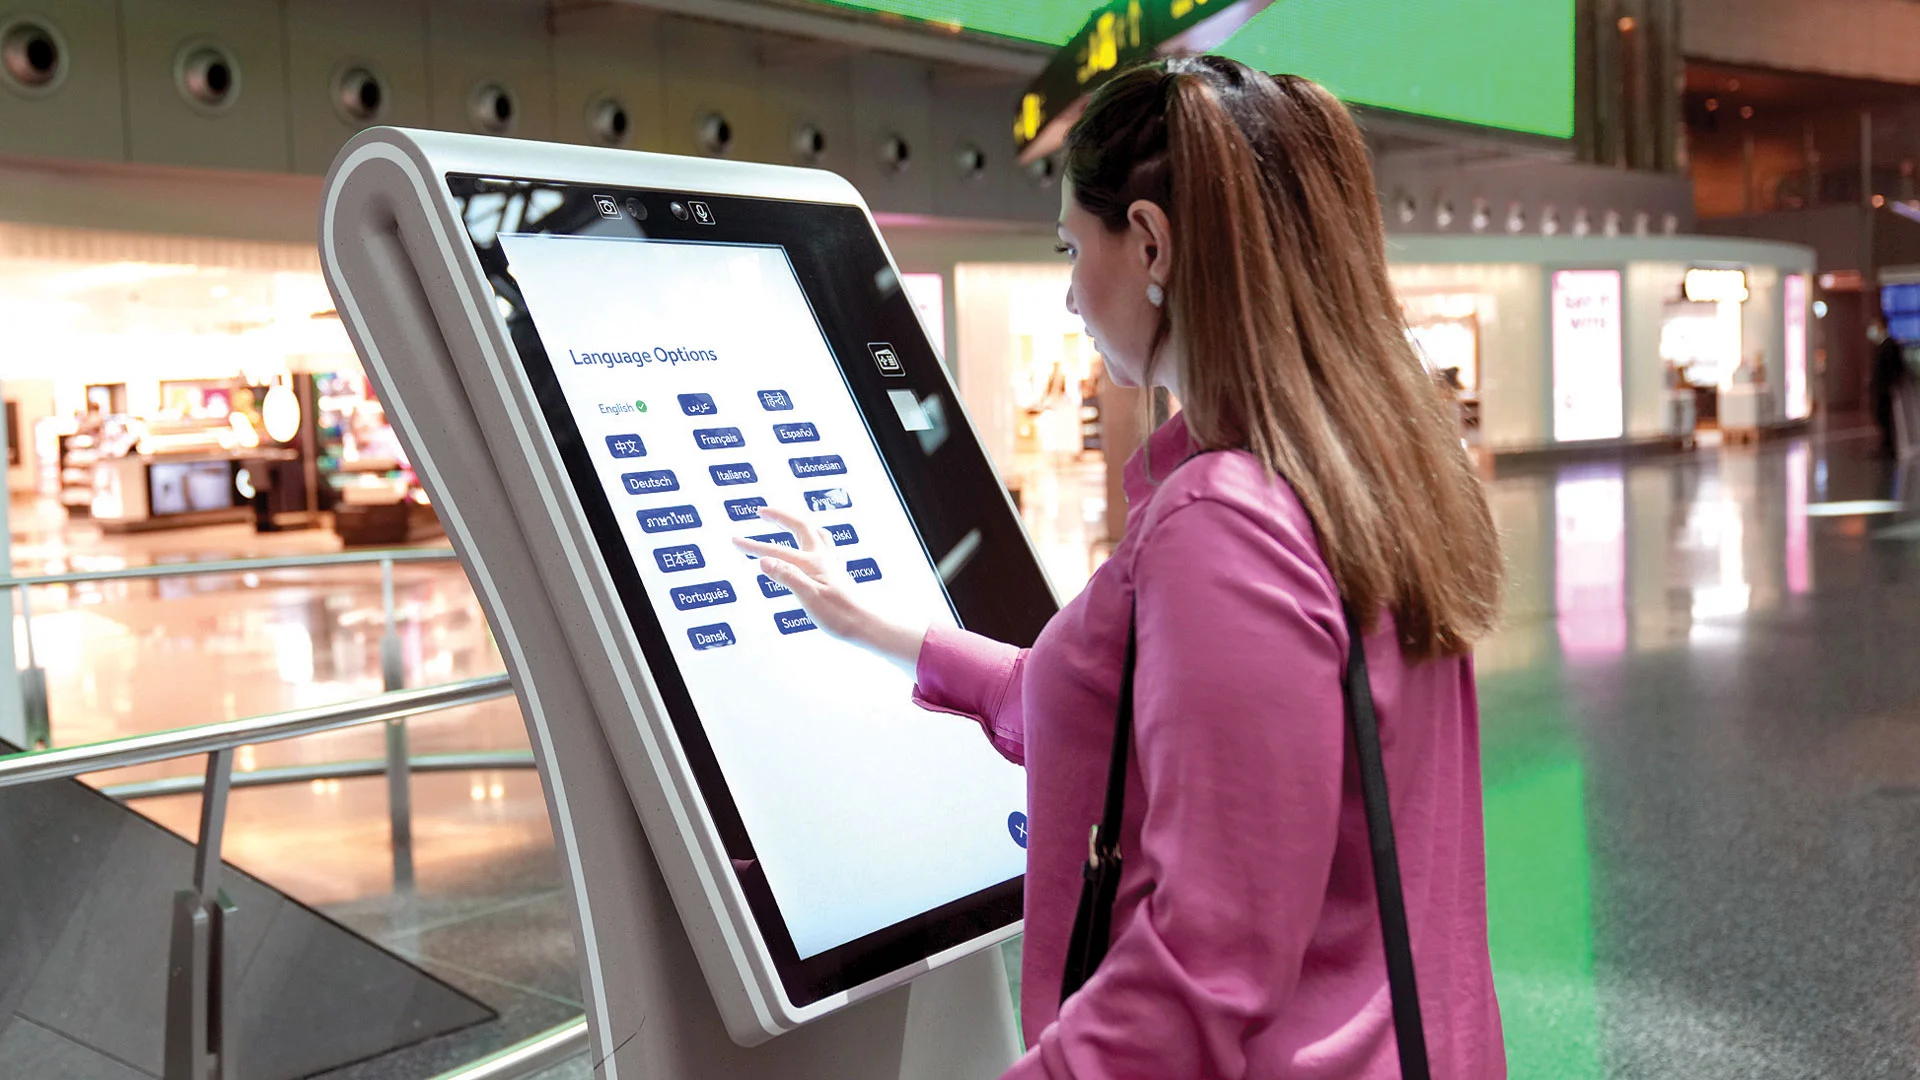 HIA Launches Passenger Digital Assistance Kiosks